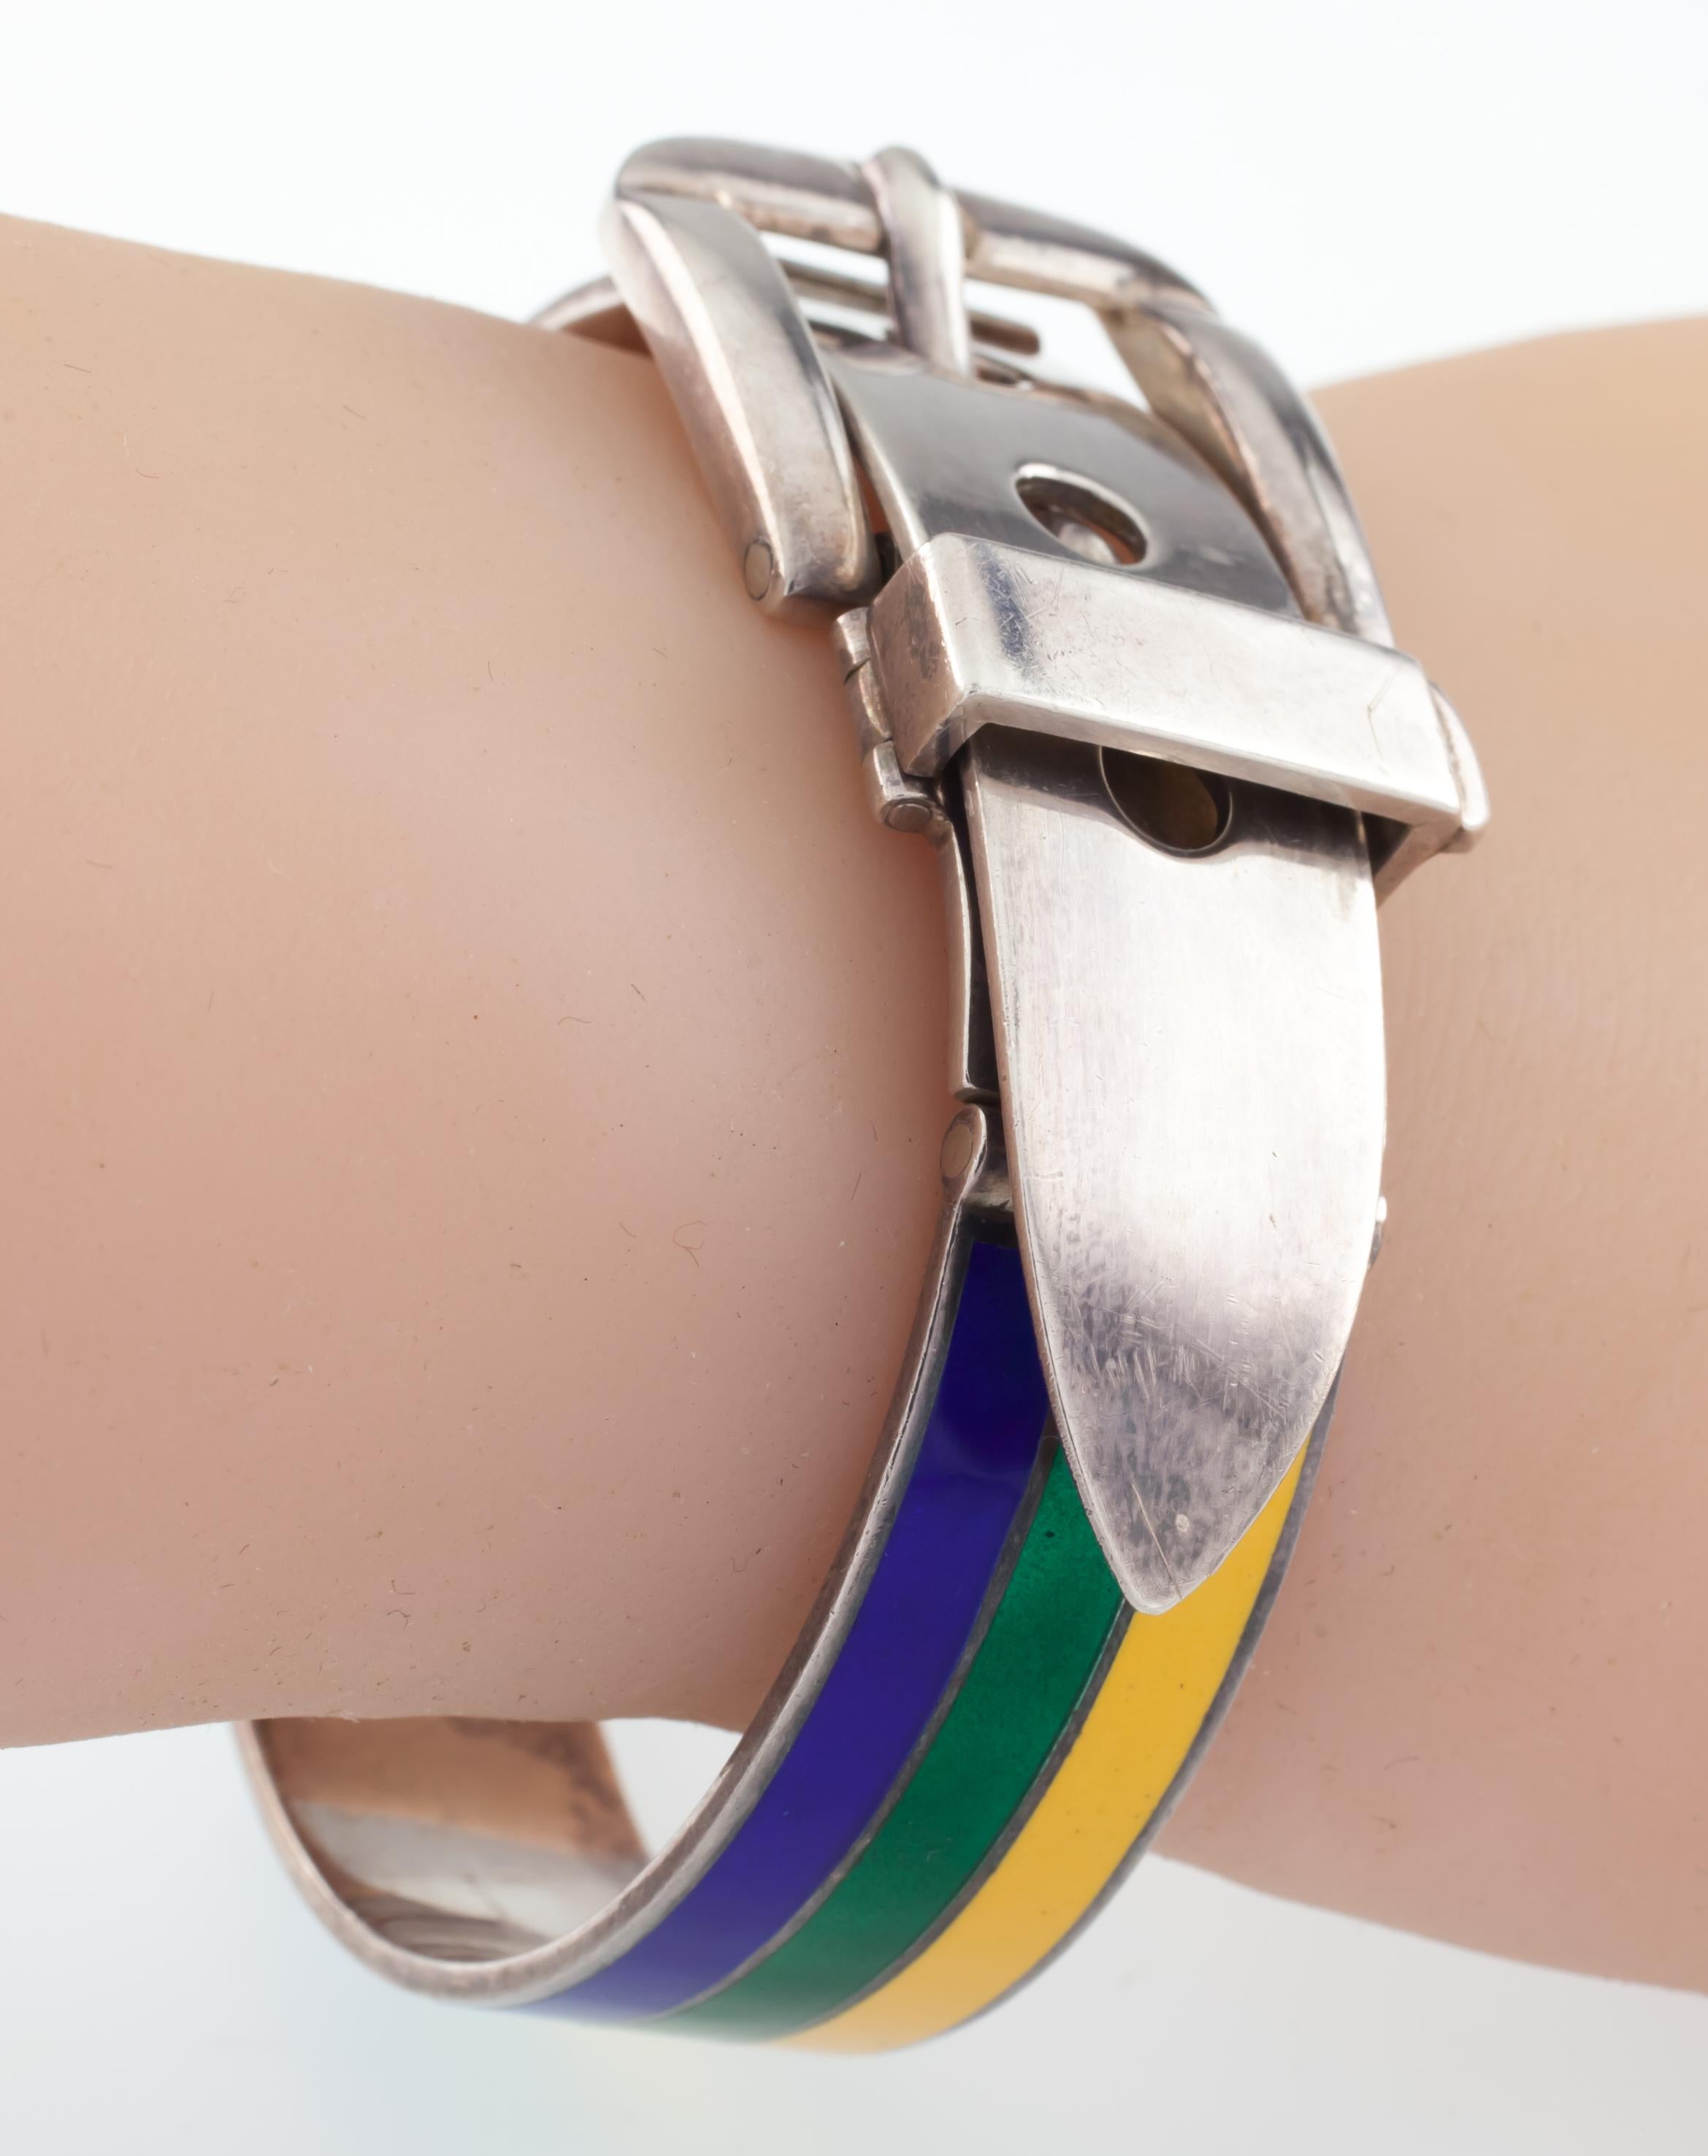 gucci belt bracelet